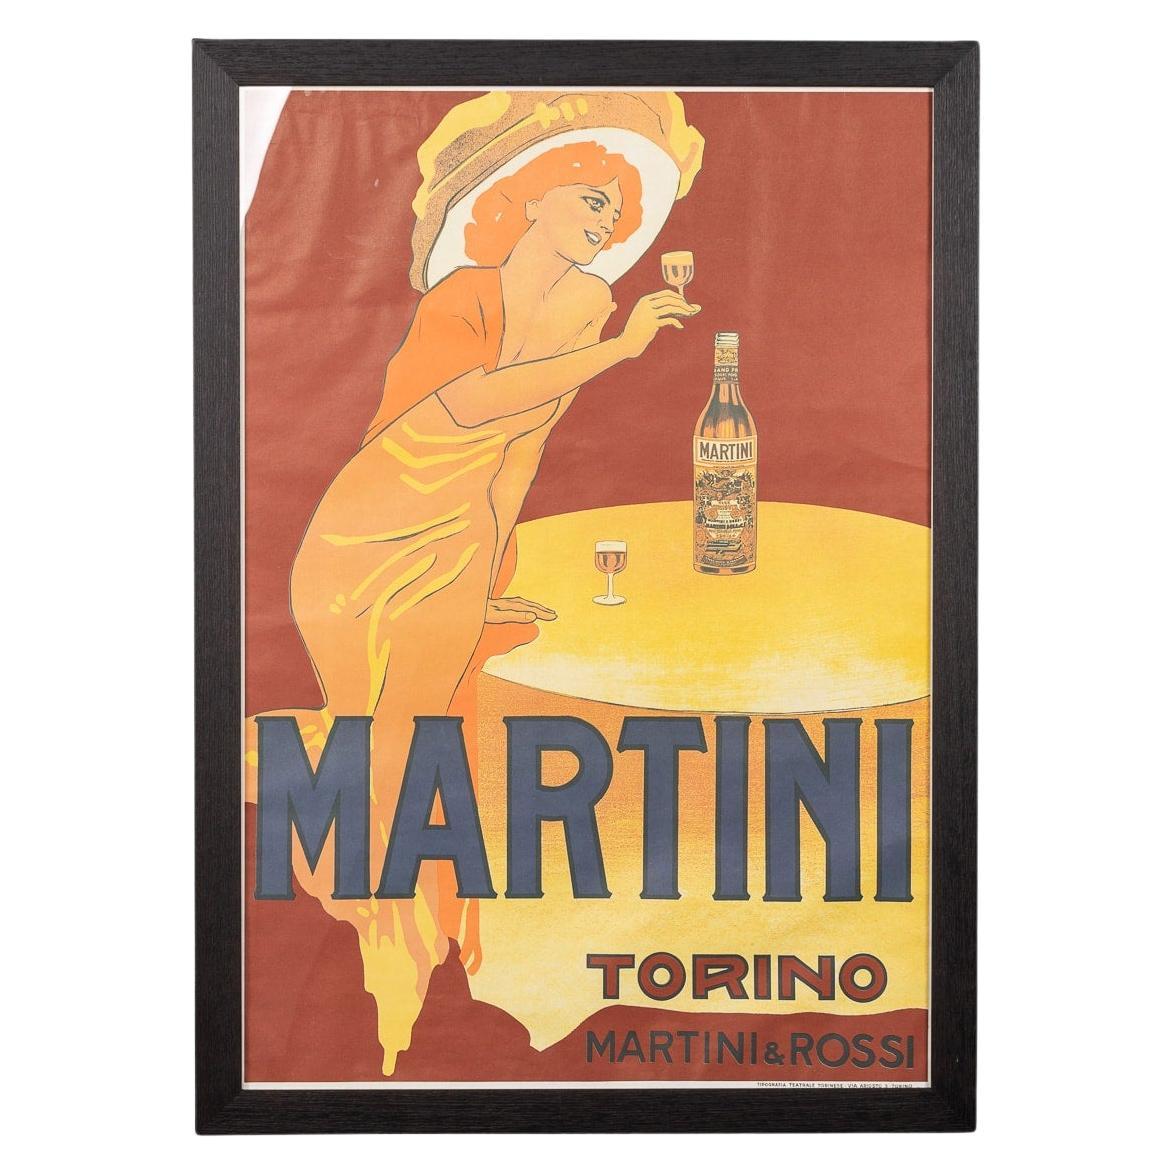 Gerahmtes Werbeplakat für Martini, Italien, um 1970